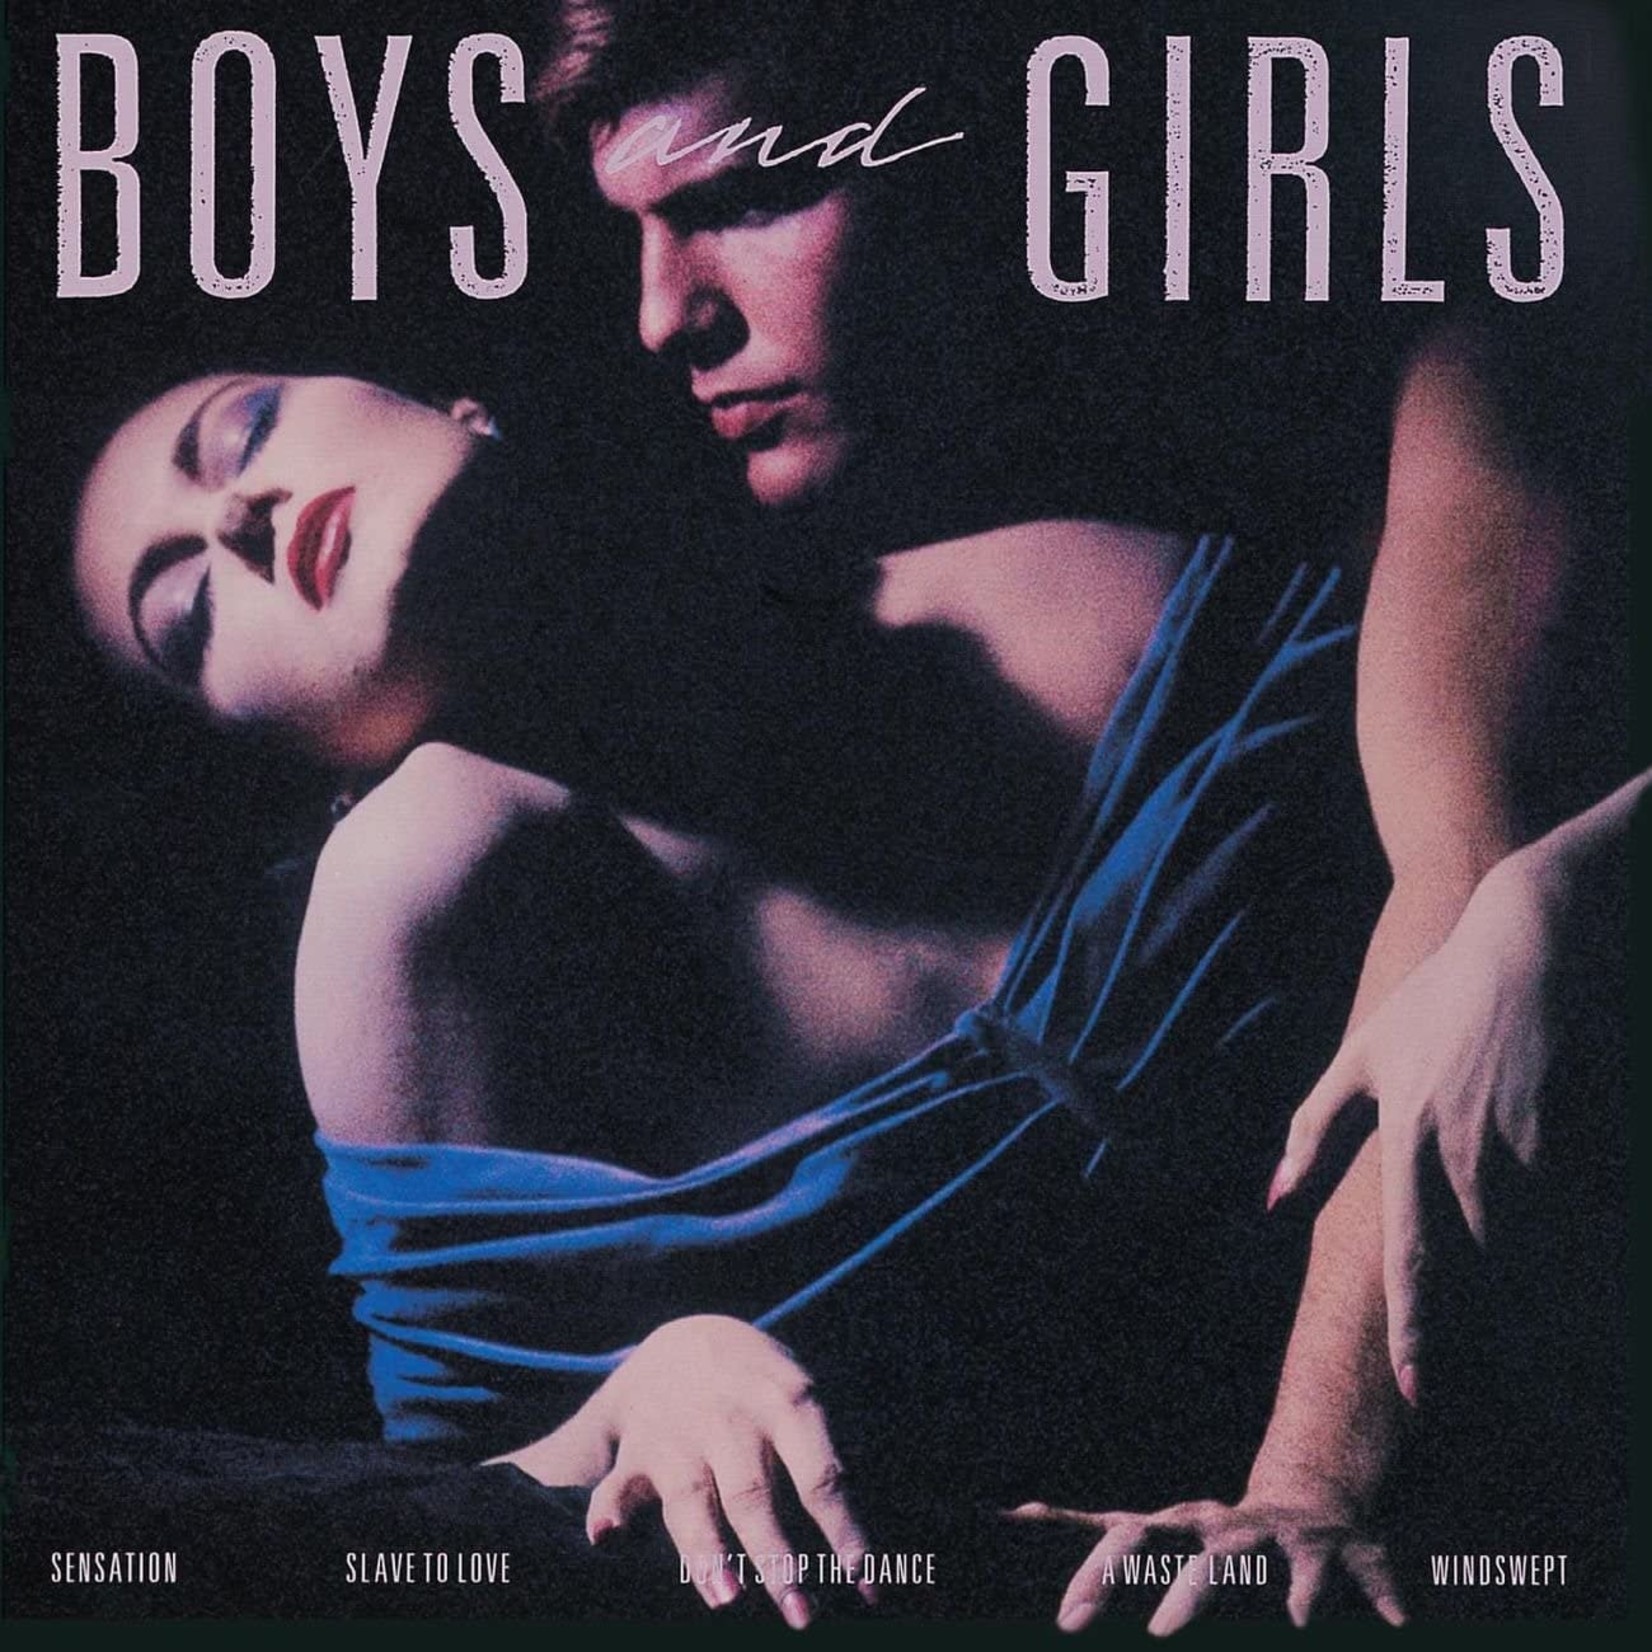 [Vintage] Bryan Ferry - Boys and Girls